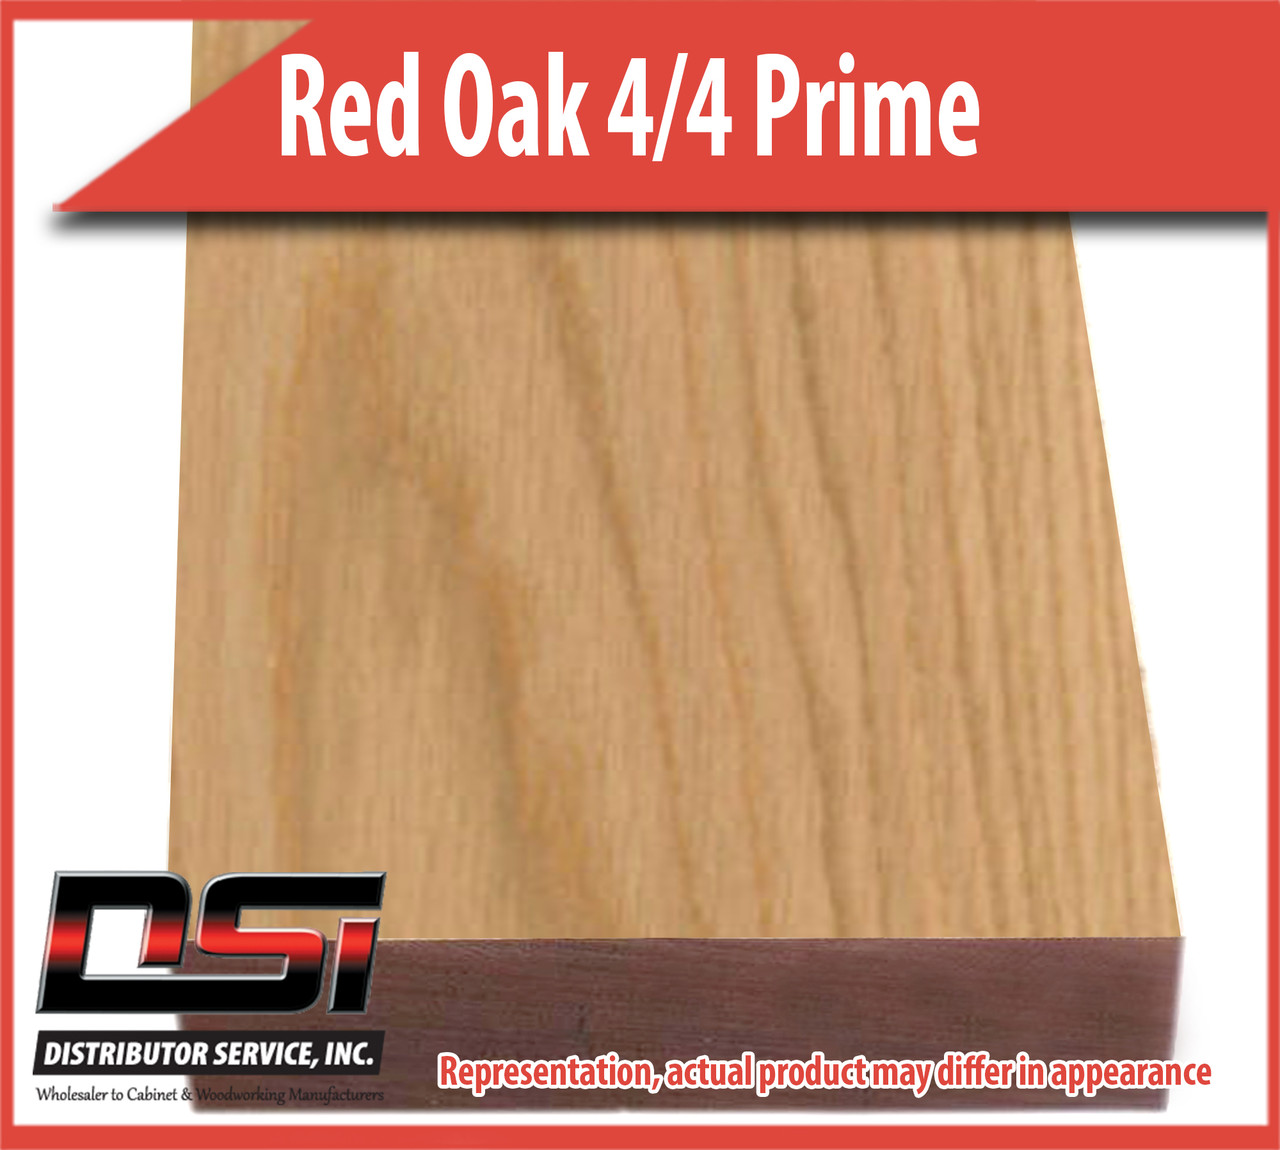 Domestic Hardwood Lumber Red Oak 4/4 Prime Color Sort 15/16" 8'